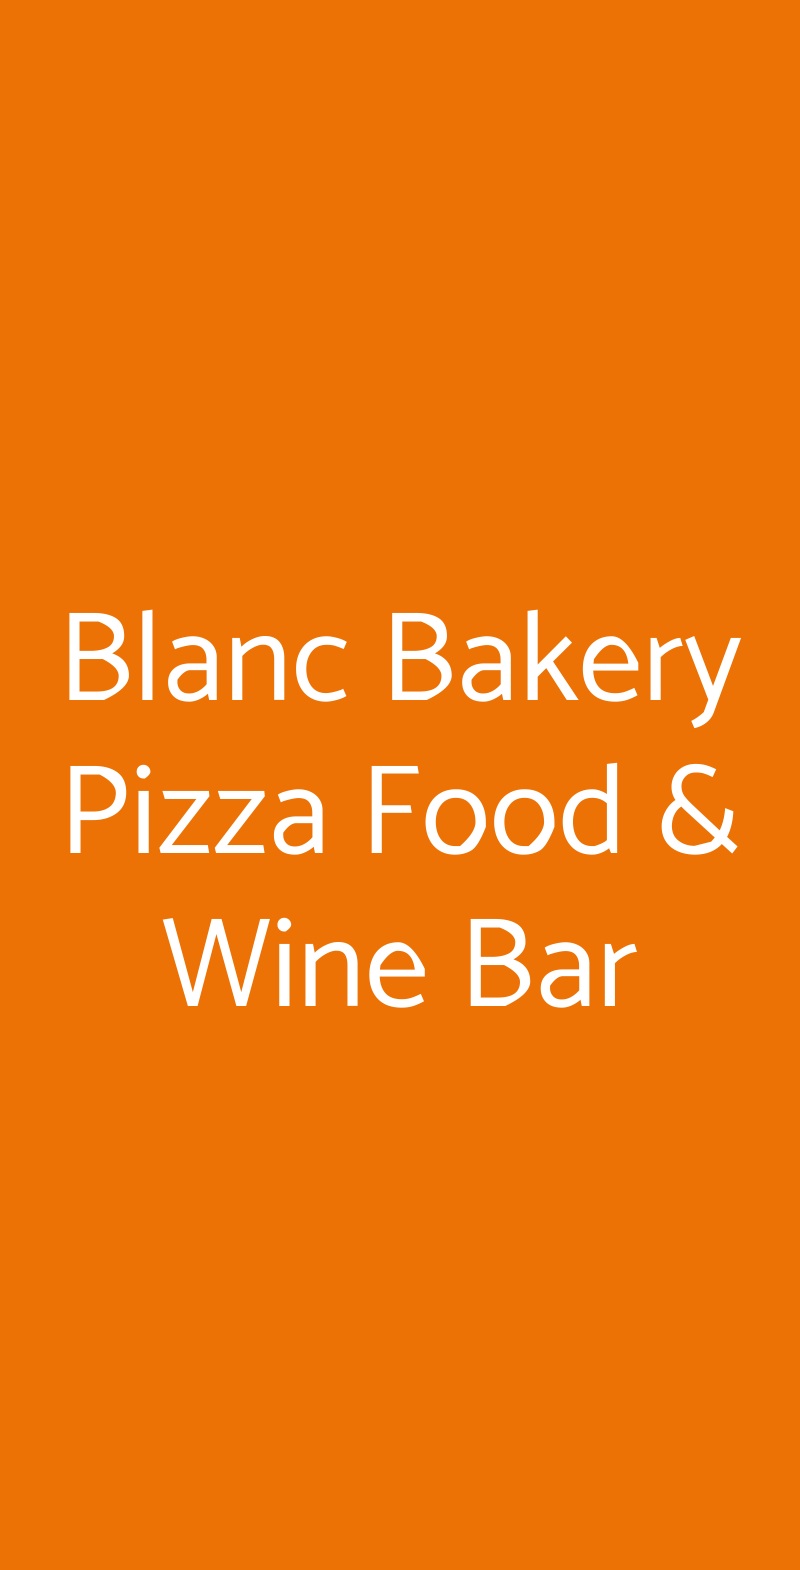 Blanc Bakery Pizza Food & Wine Bar Monza menù 1 pagina